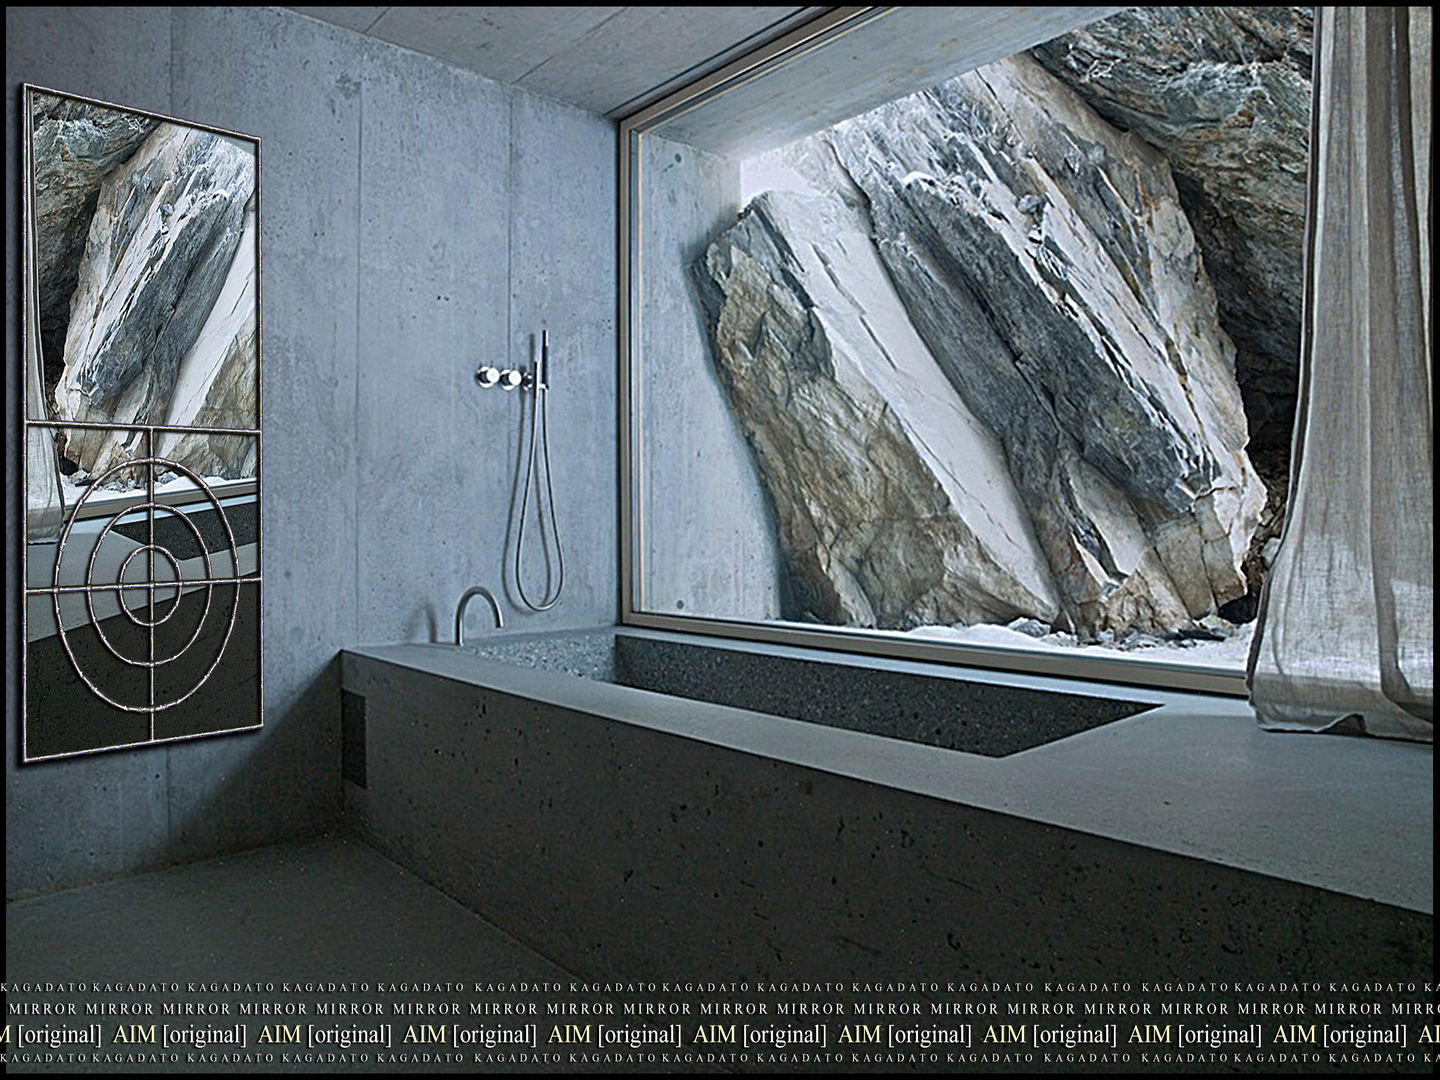 Creative mirror - KAGADATO Salle de bain industrielle Miroirs